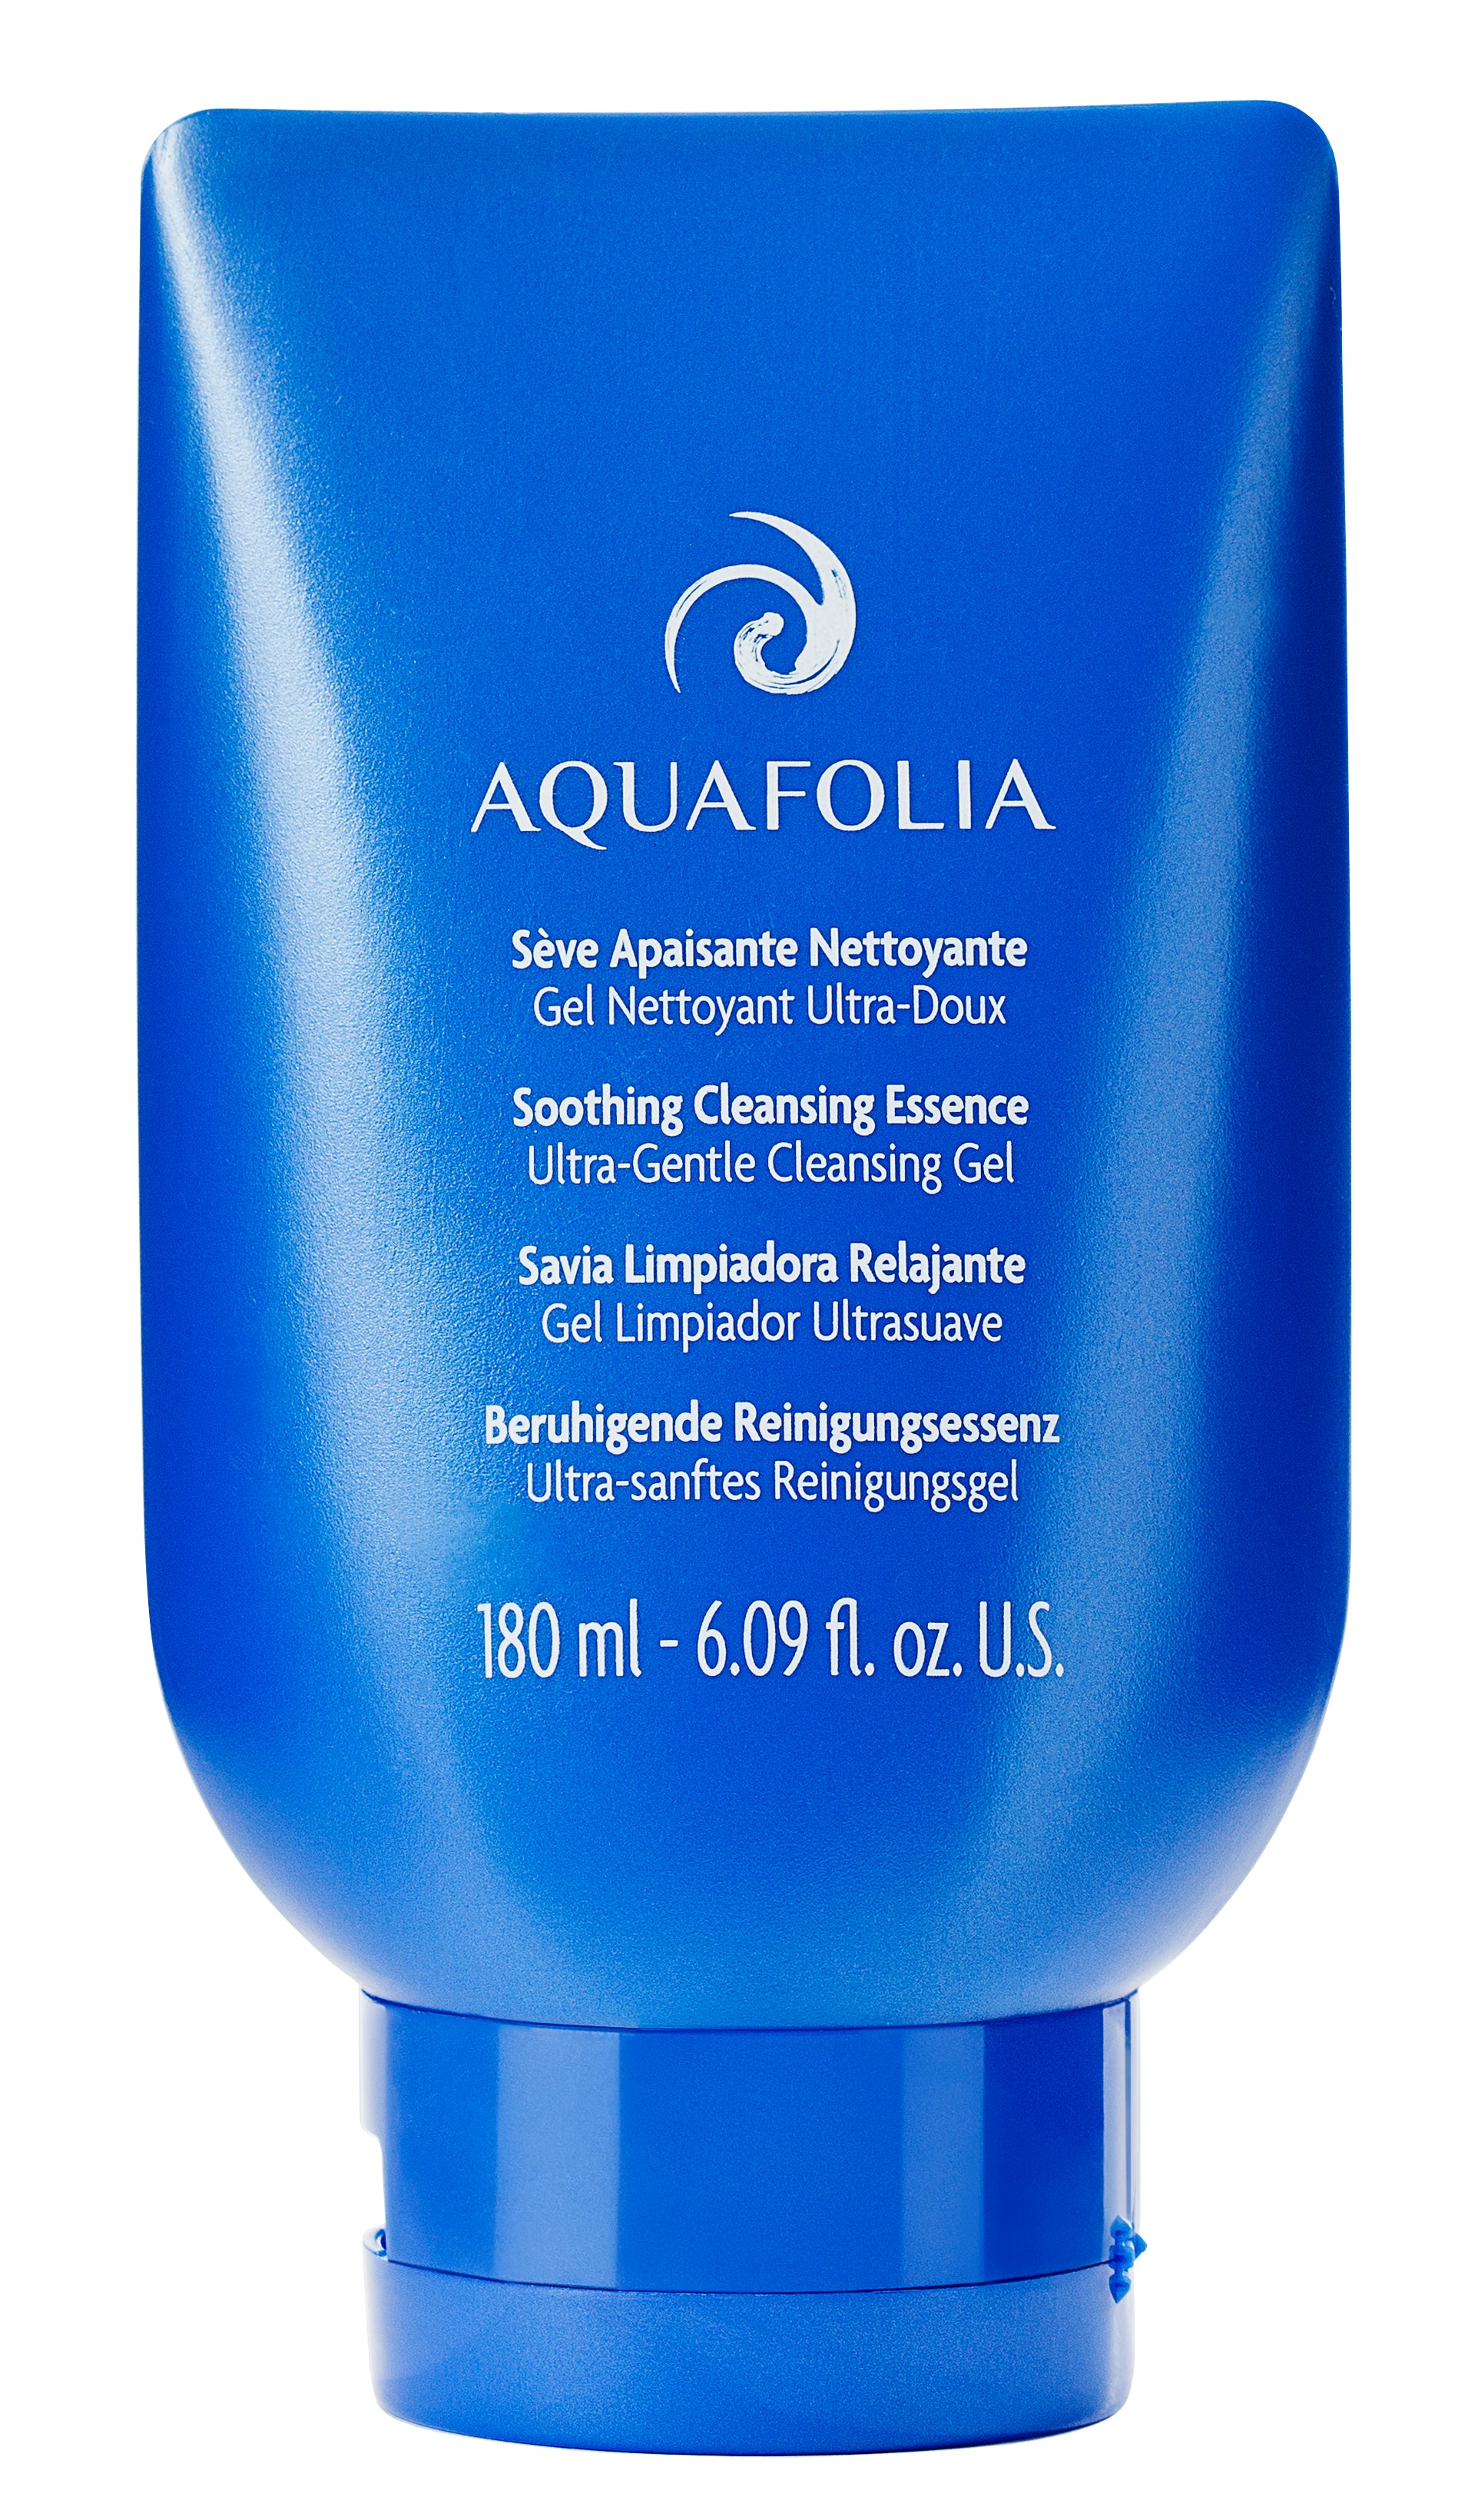 Aquafolia- Sève Apaisante Nettoyante- Produits pour tous